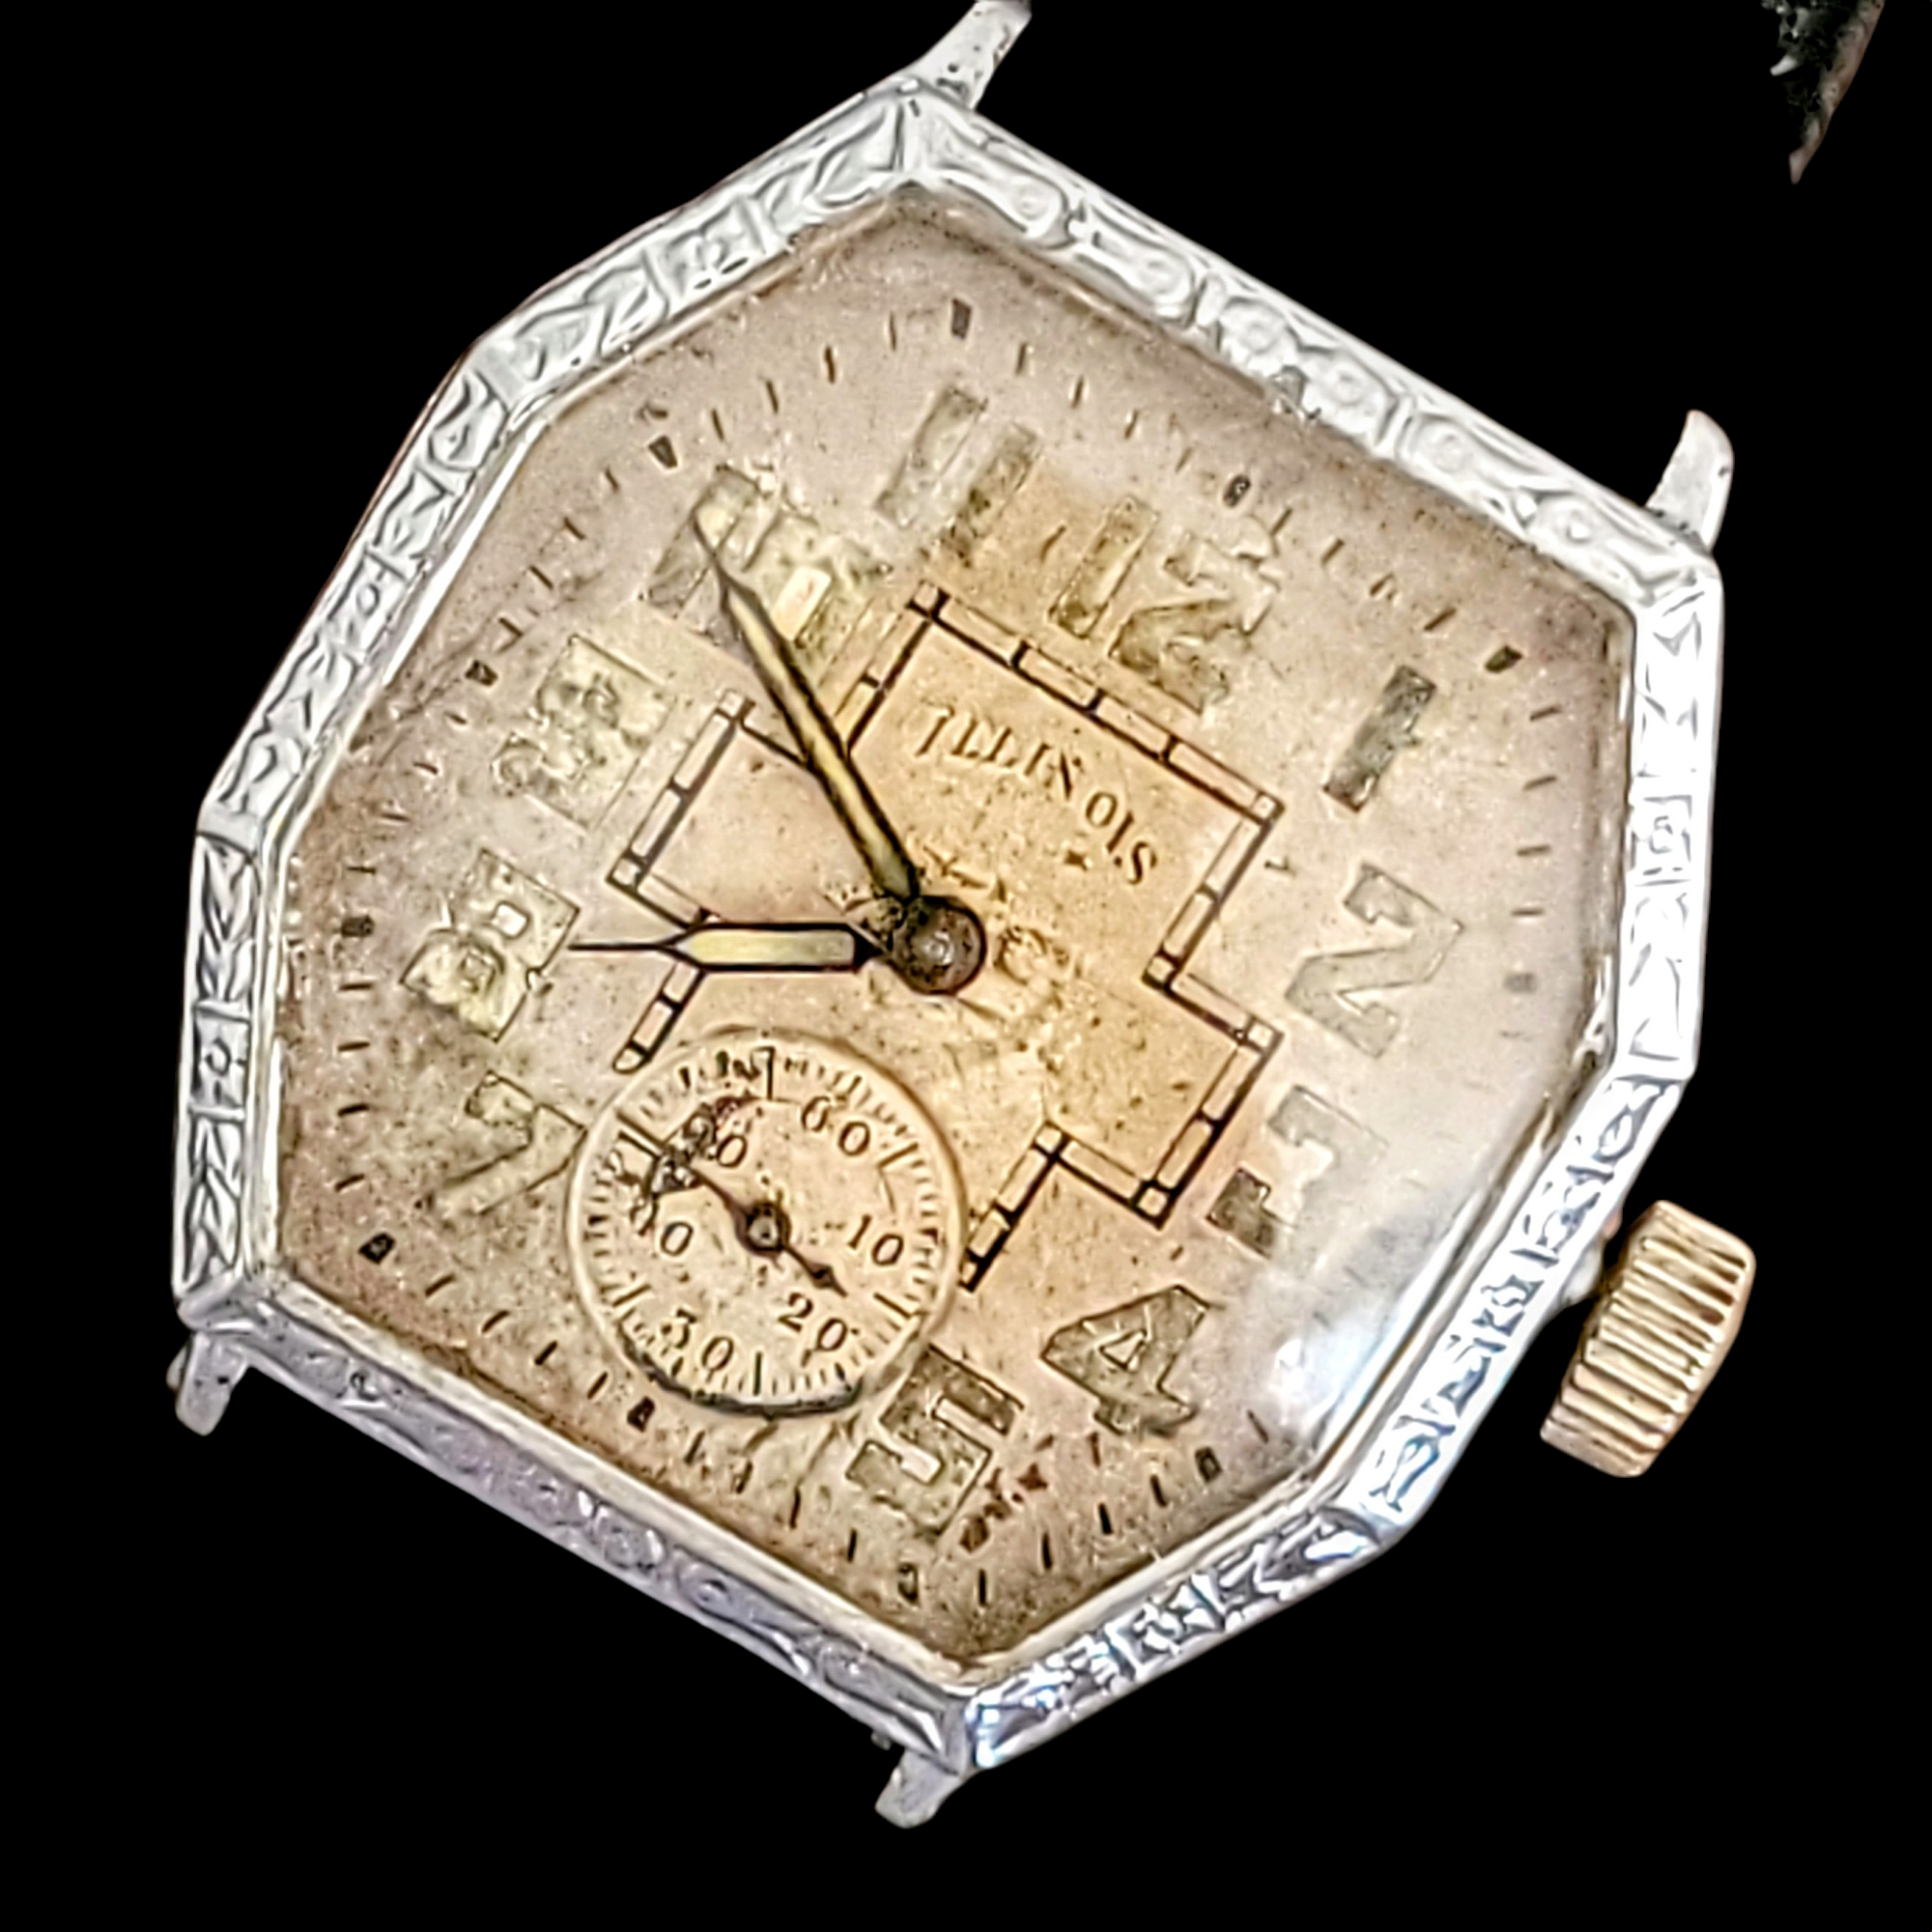 1929 Illinois Watch Company Ace